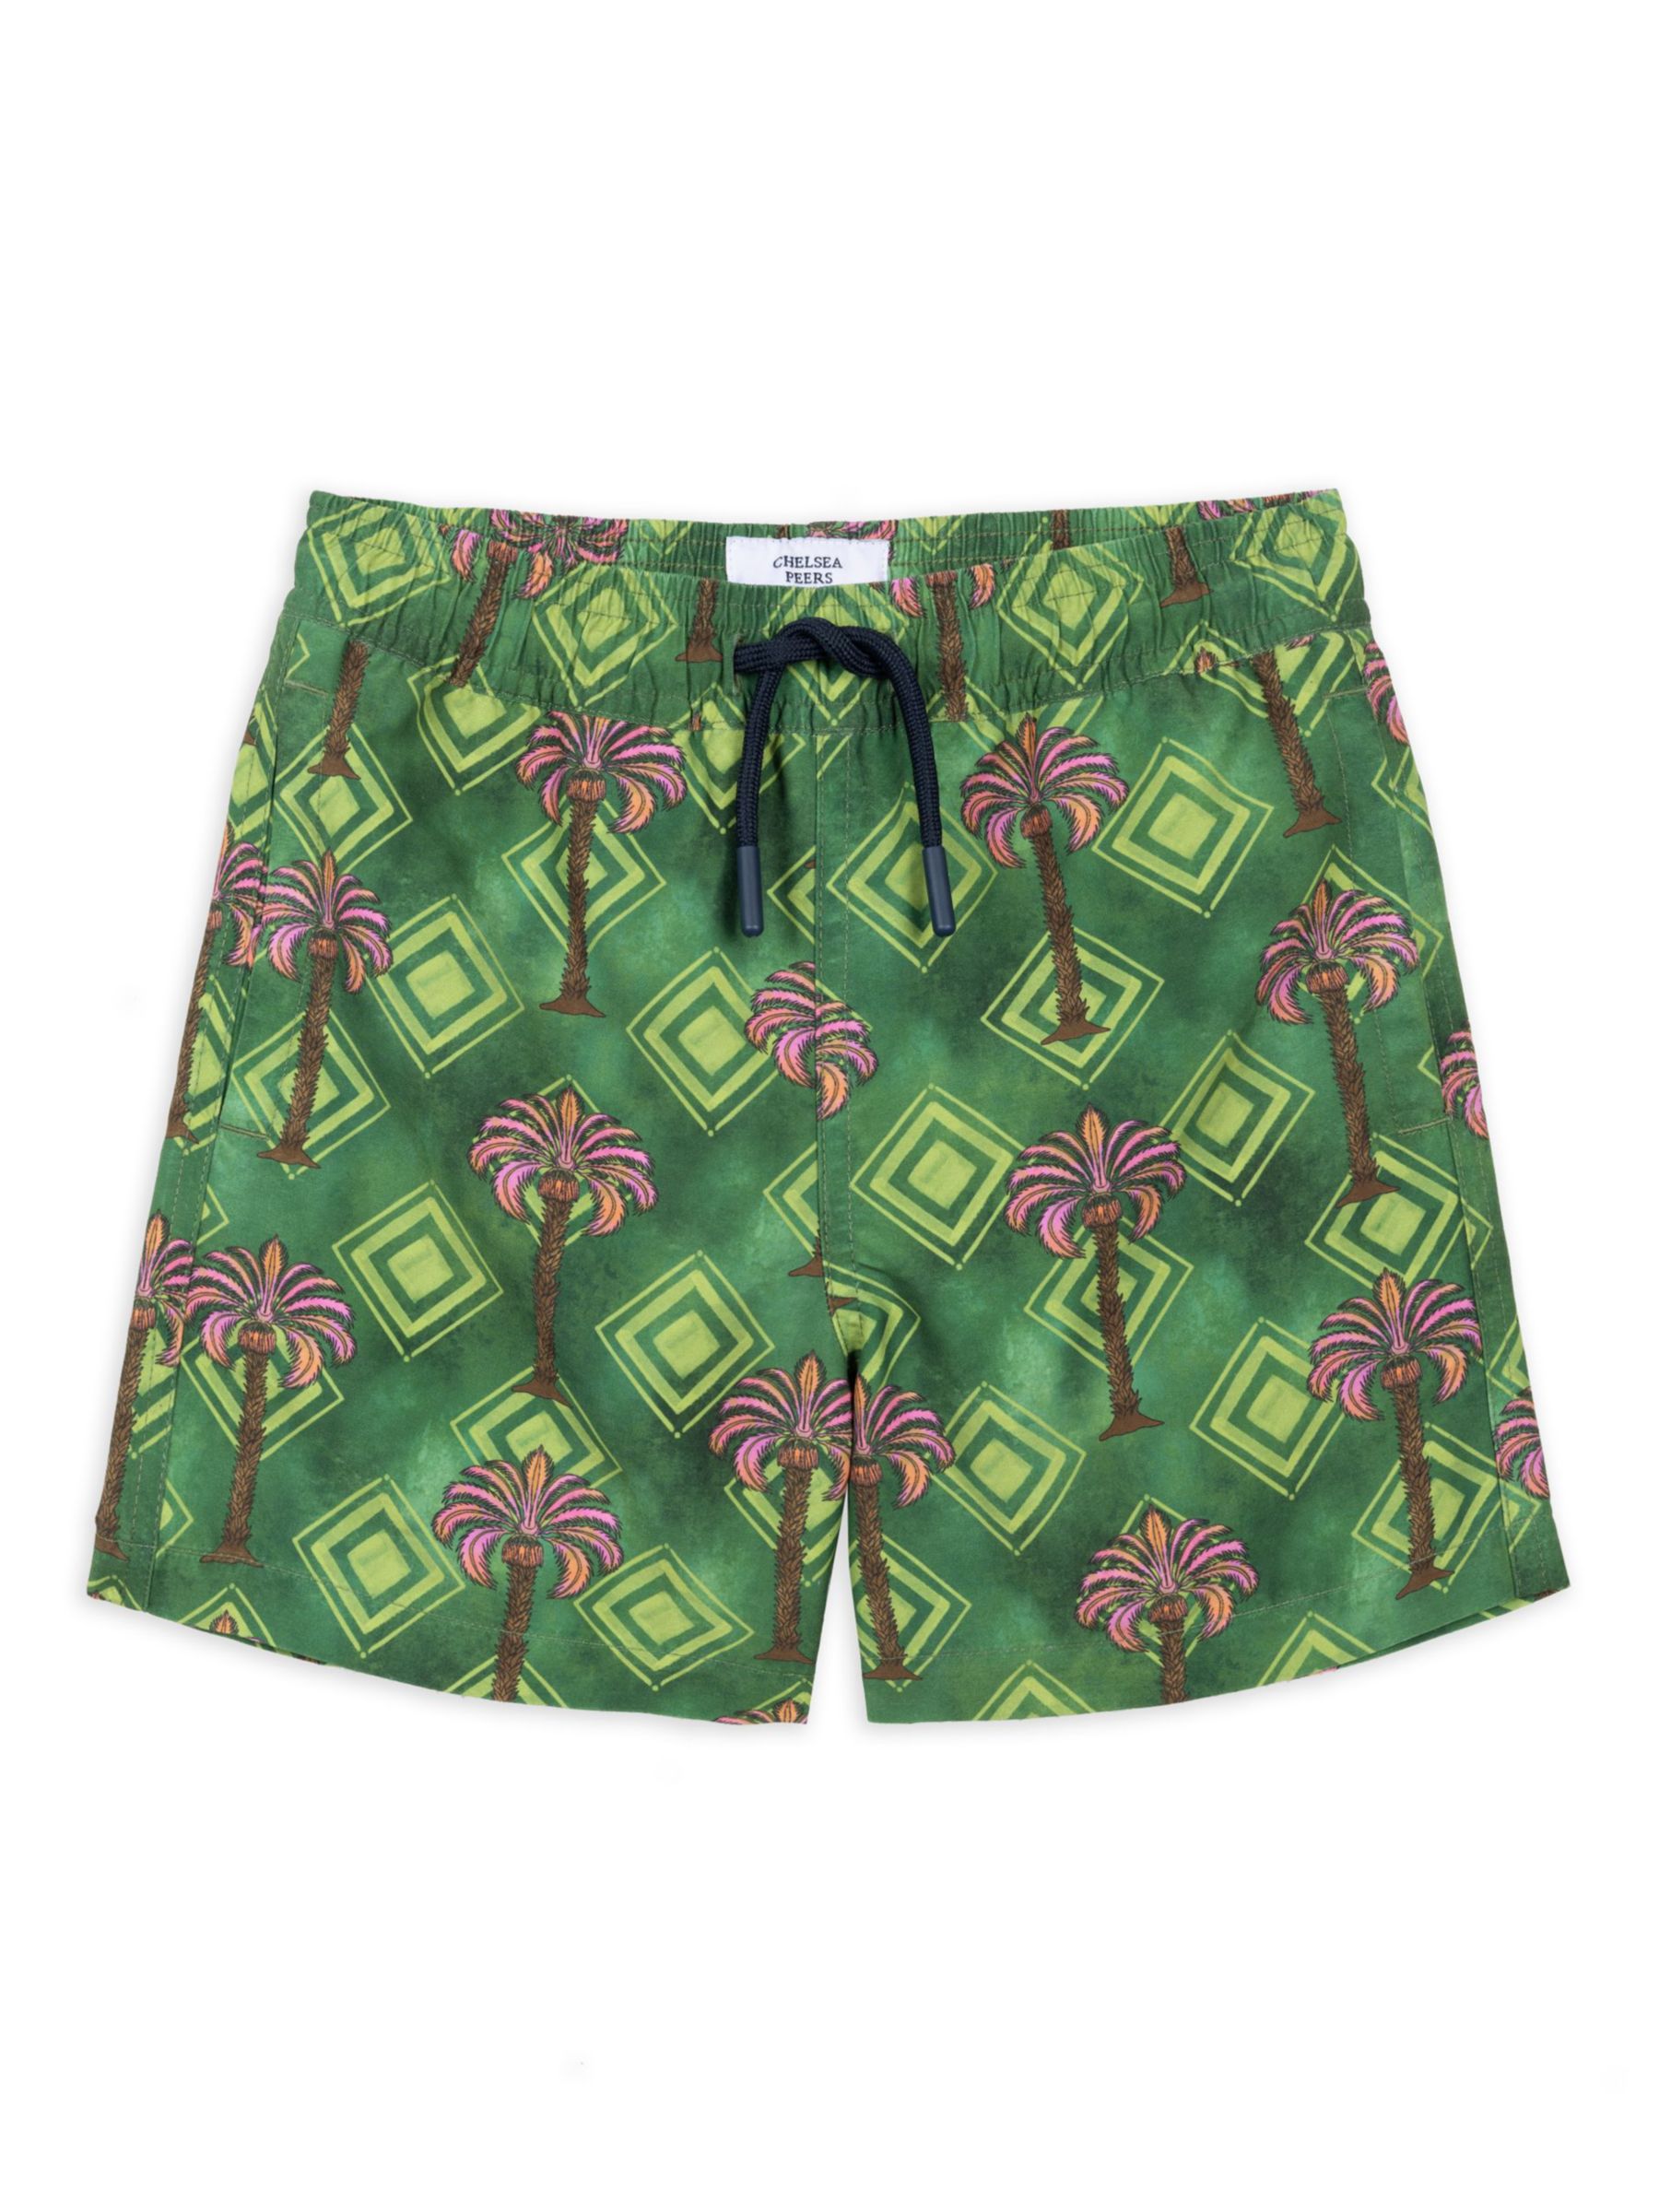 Chelsea Peers Kids' Geometric Palm Print Swim Shorts, Khaki/Multi, 1-2 years